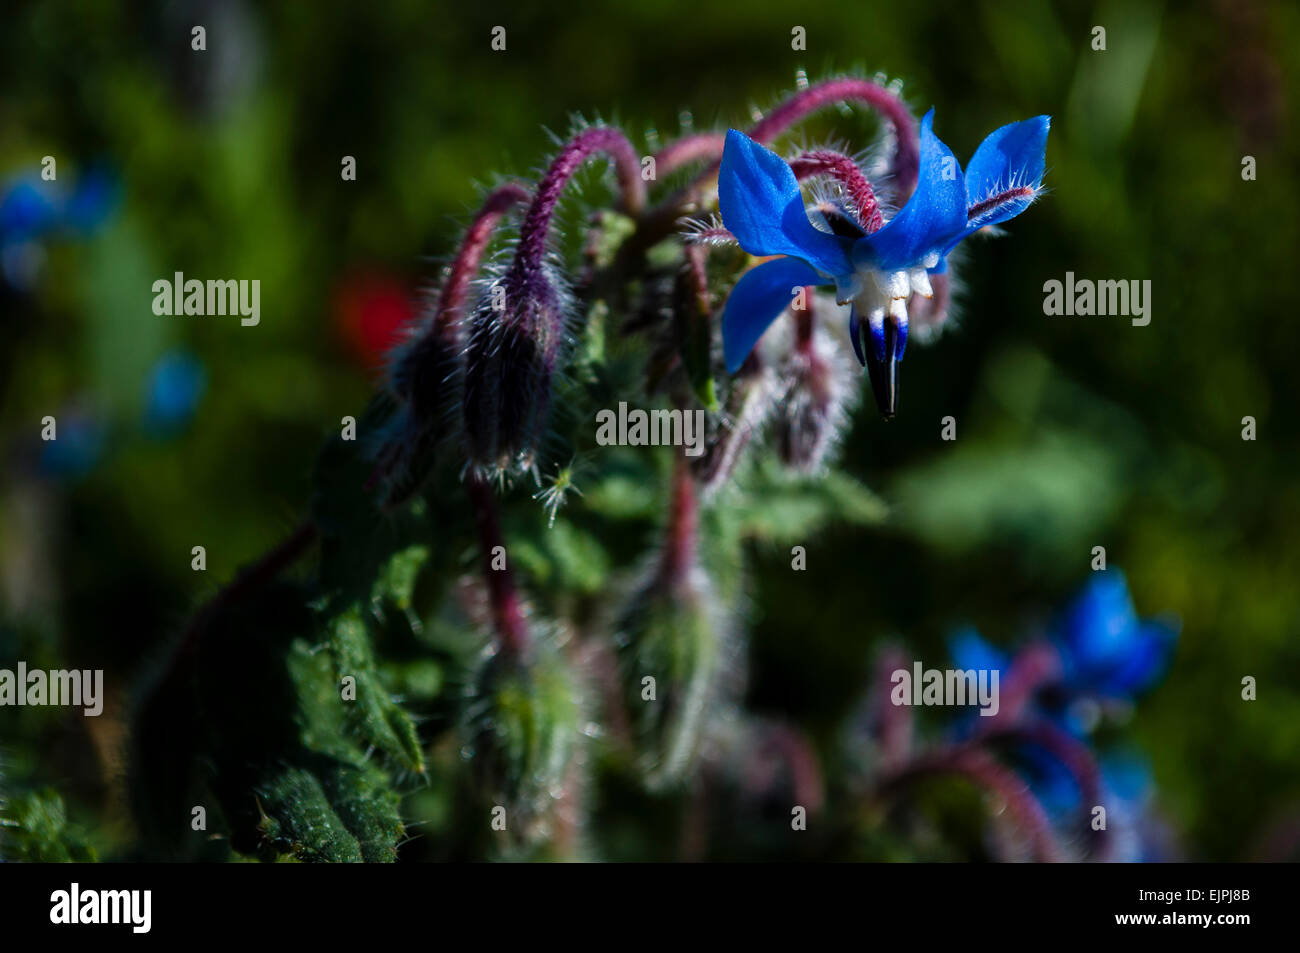 Borago officinalis. Borage flower, flor de la borraja, blue flower, flor azul Stock Photo